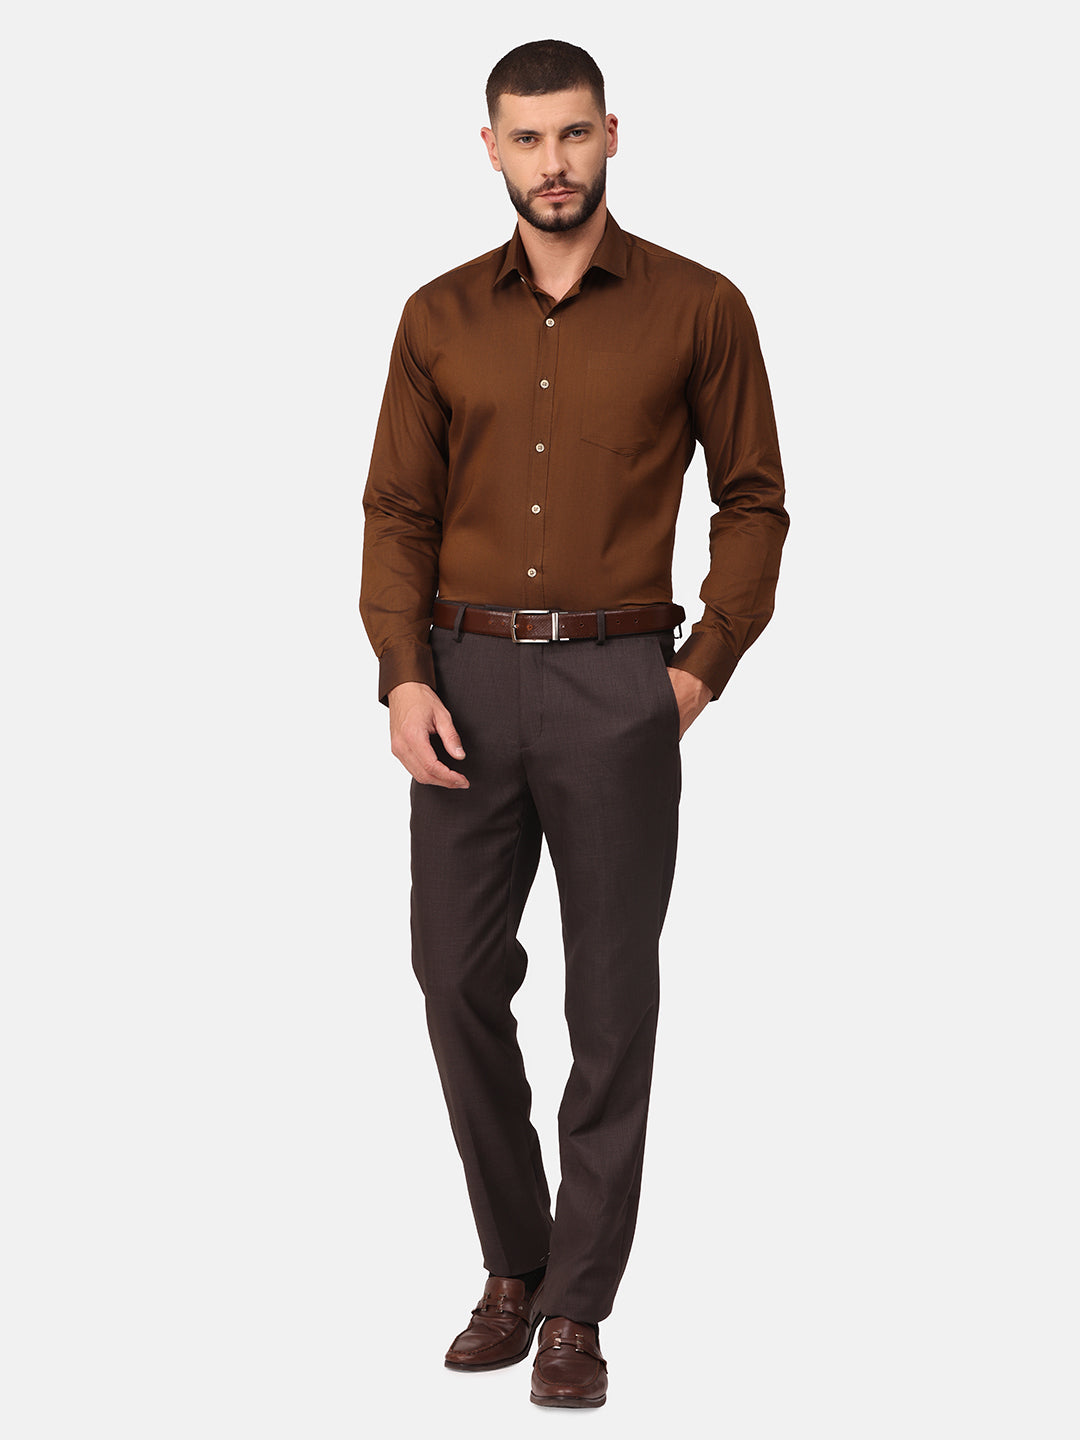 Brown Shirt Matching Pants | Brown Shirts Combination Pant Ideas -  TiptopGents